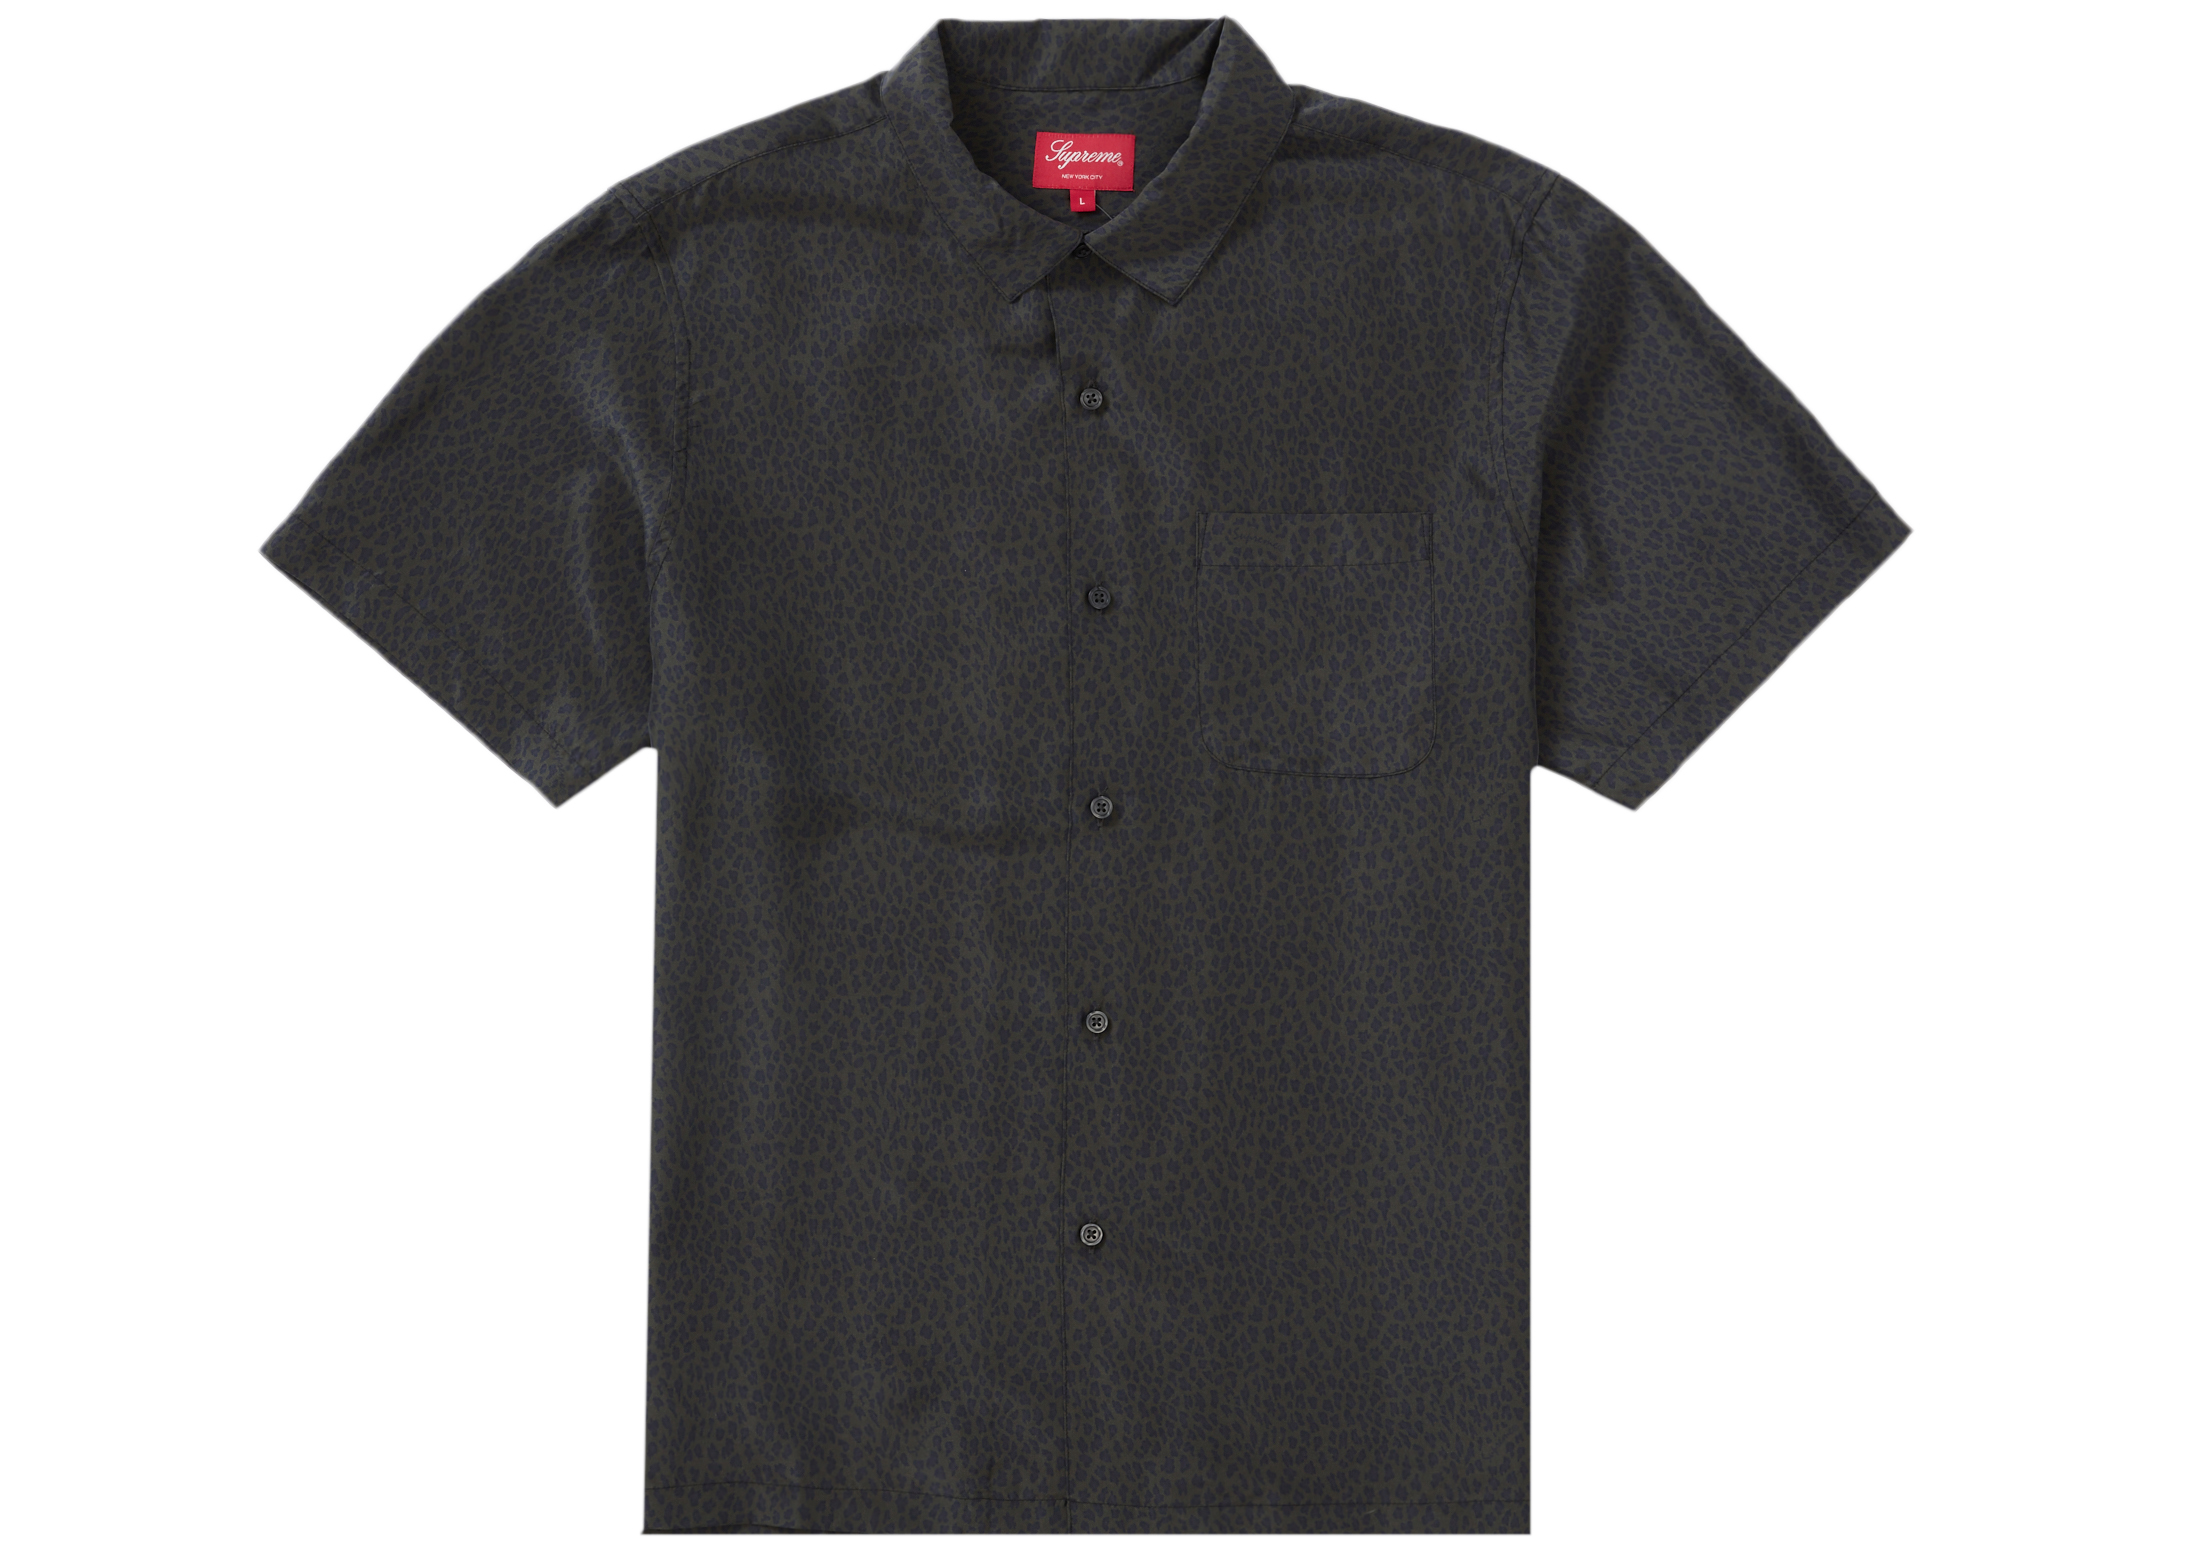 Supreme Leopard Silk S/S Shirt Tan Men's - SS22 - US